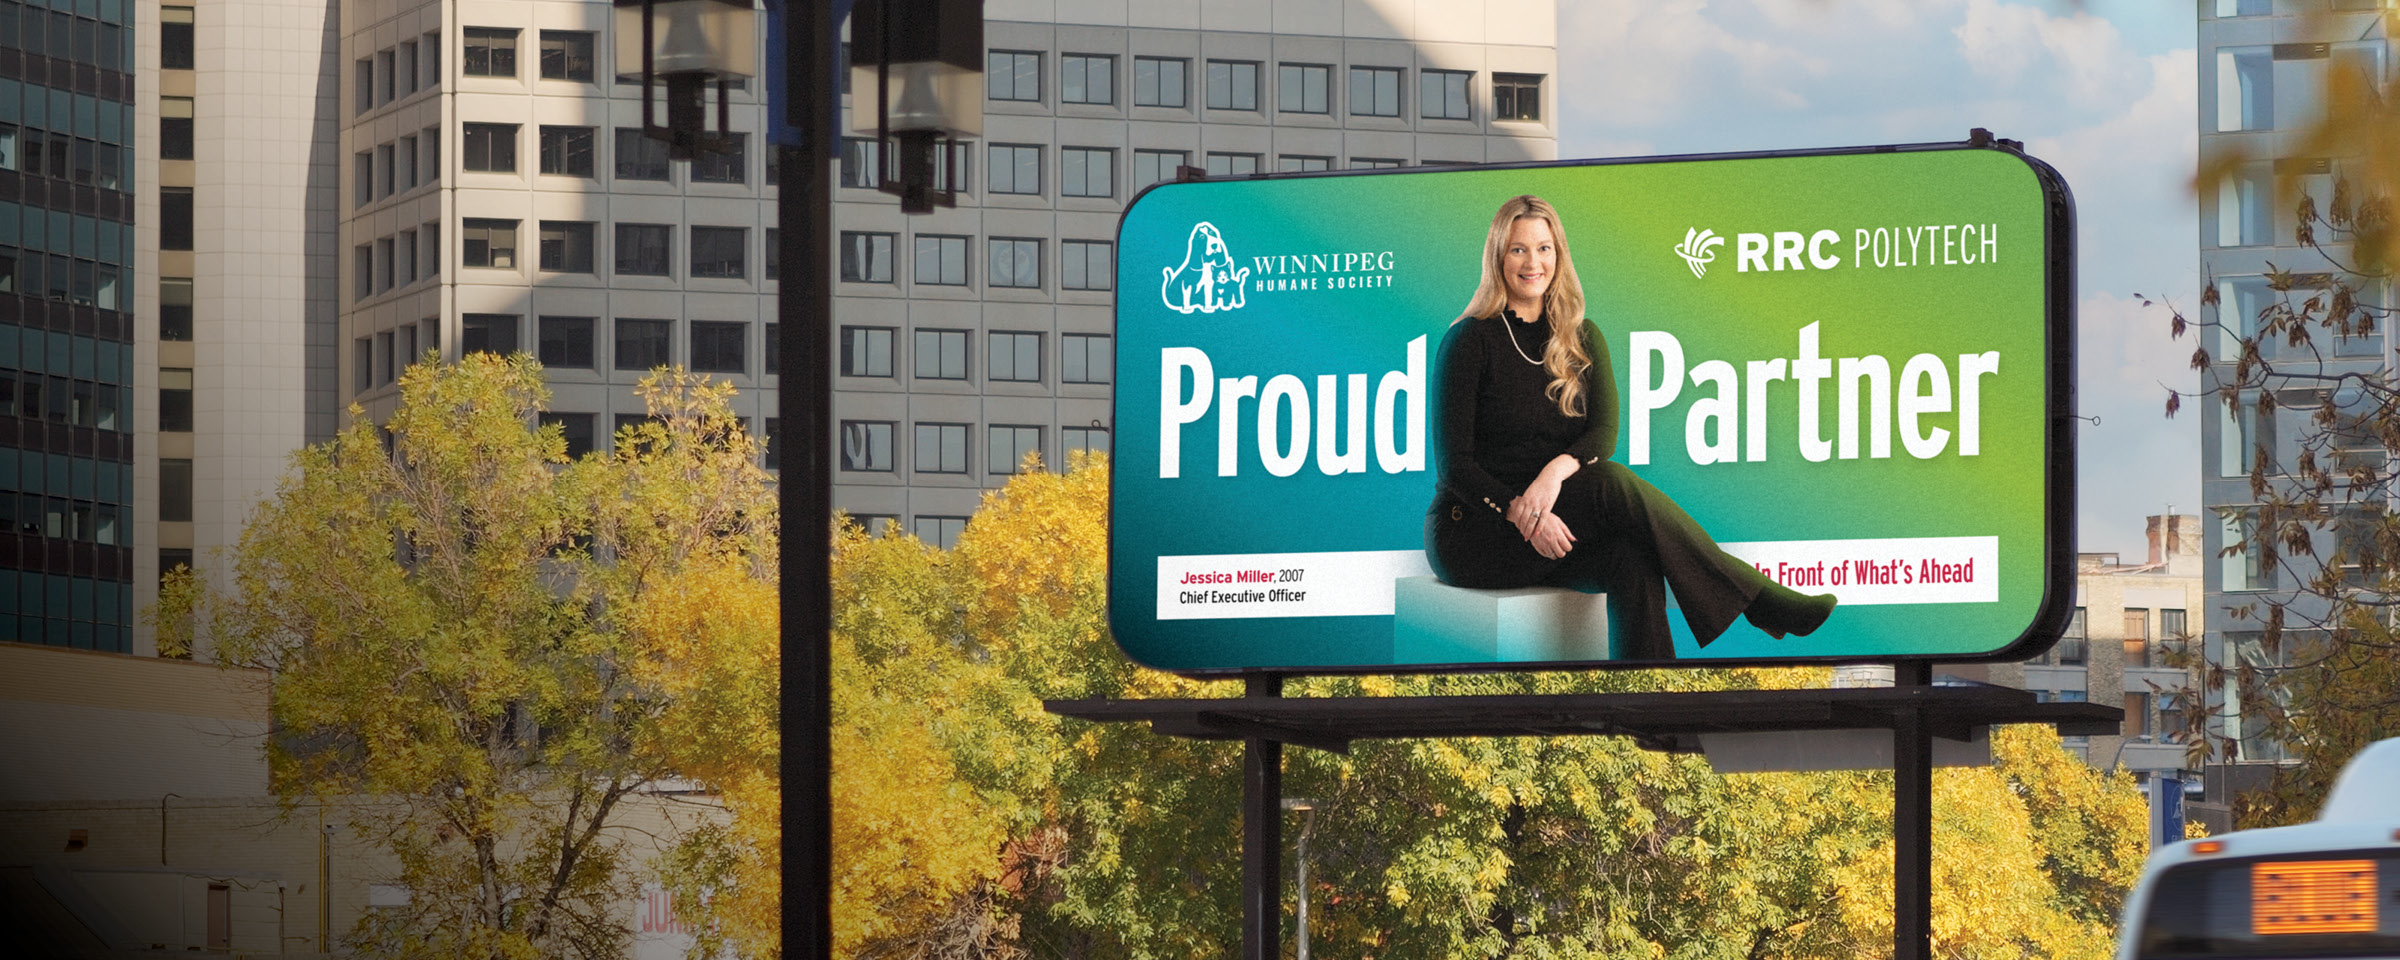 Winnipeg skyline with "Proud Partner" billboard of RRC Polytech graduate Jessica Miller.